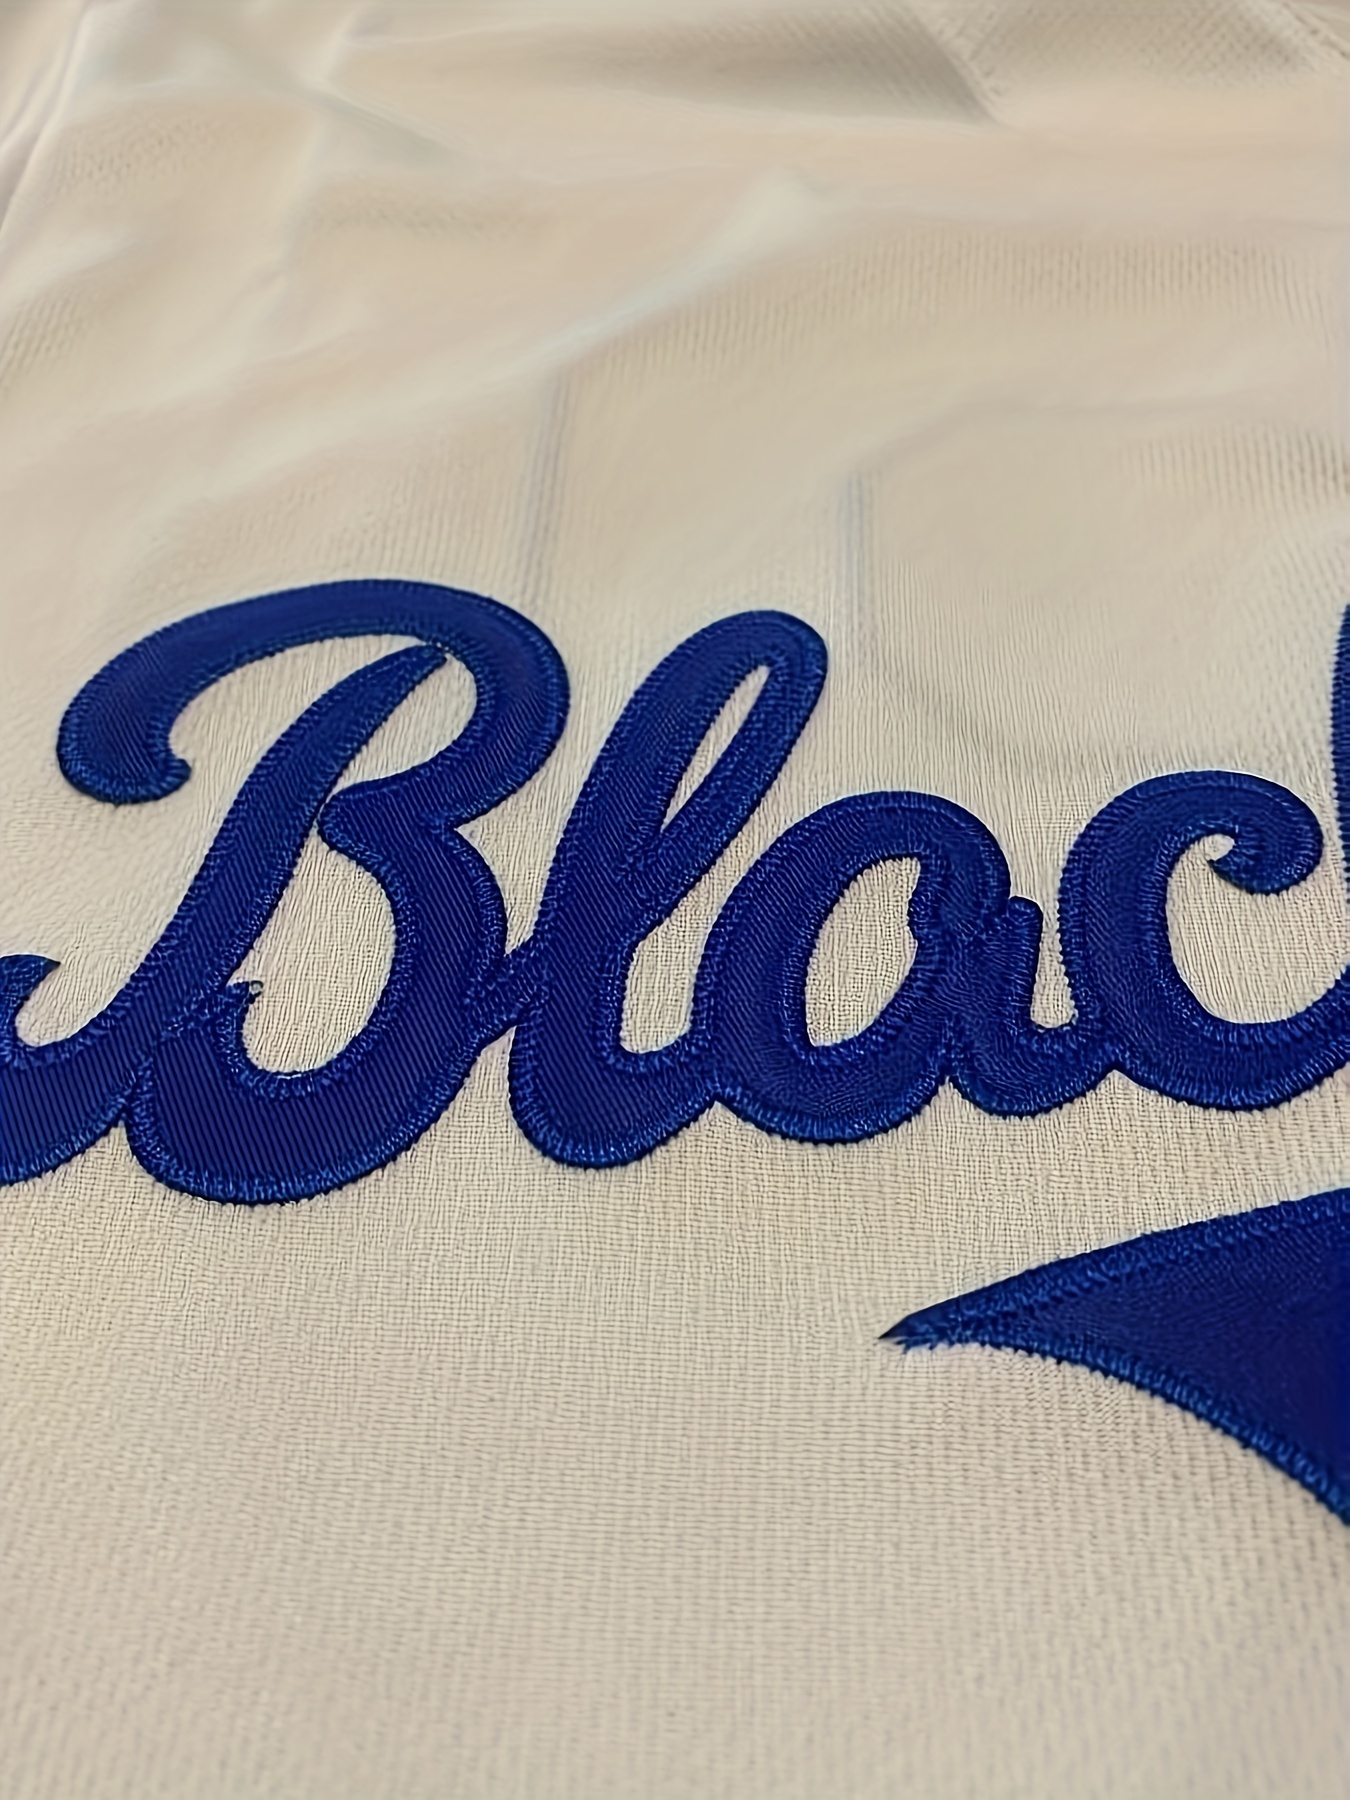 Mens Black Legend 42 Baseball Jersey Retro Classic Baseball Shirt